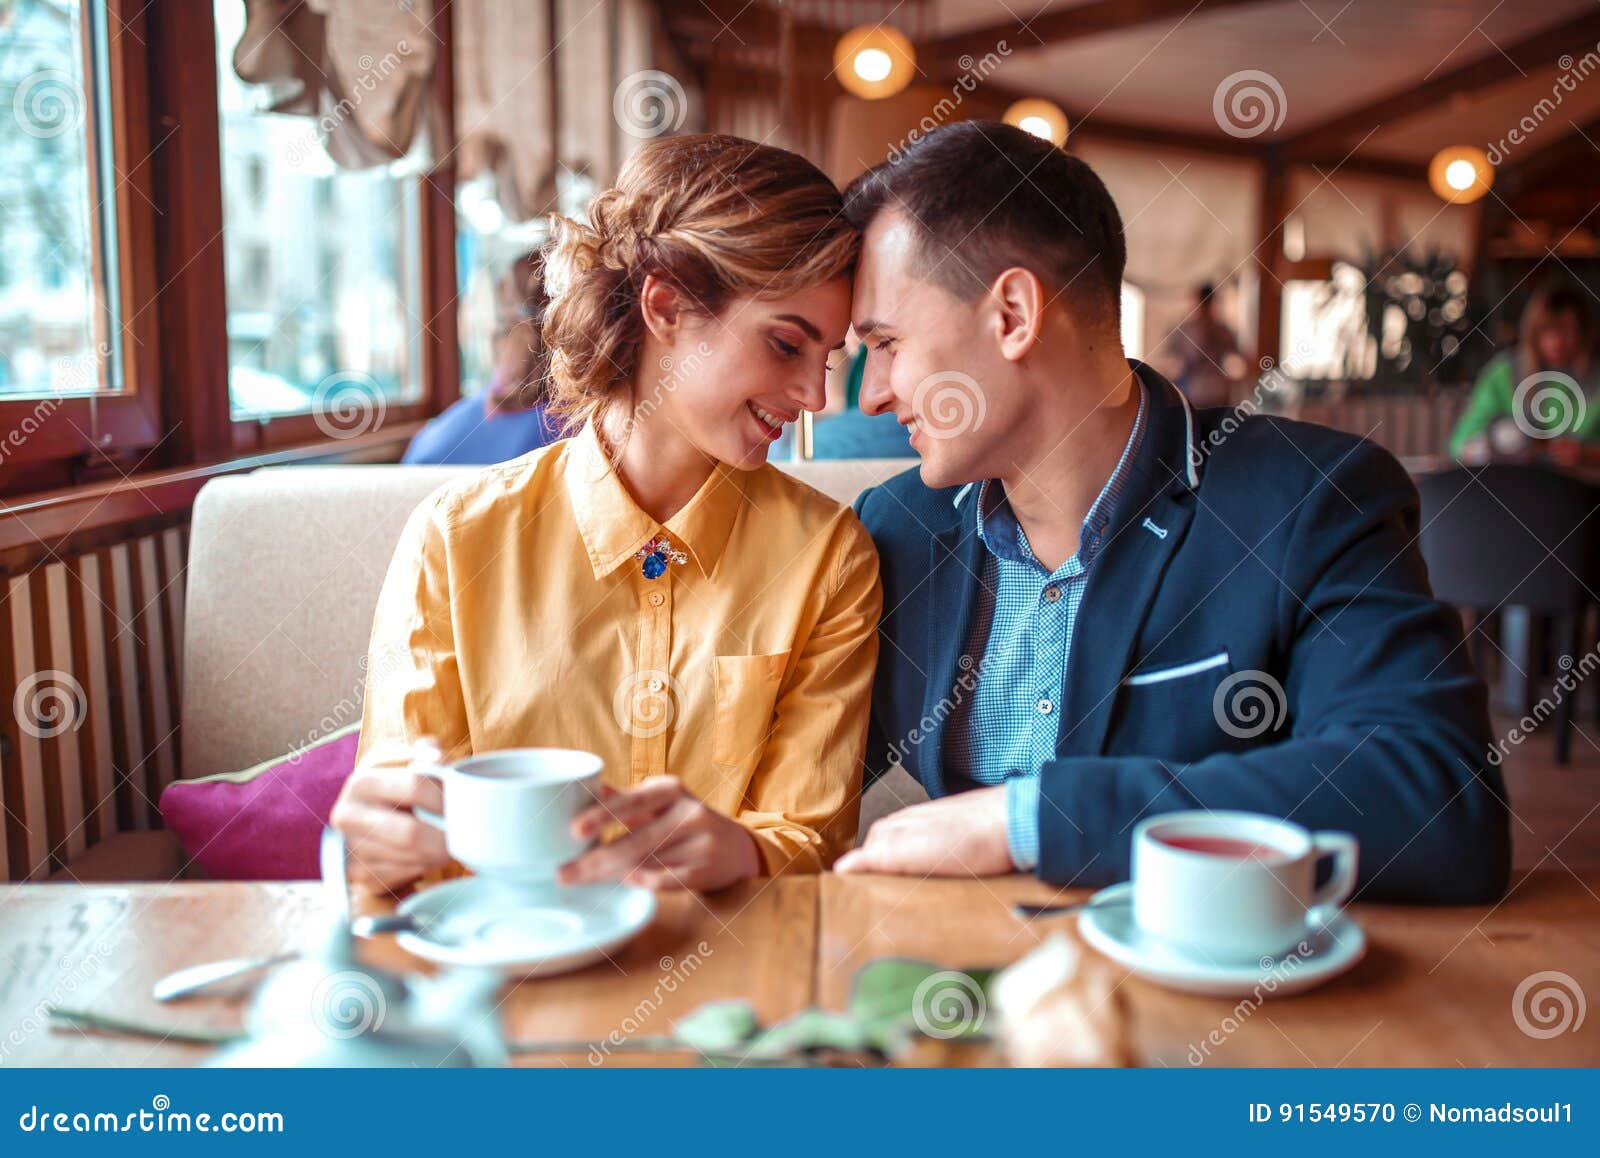 happy couple, romantic date in restaurant